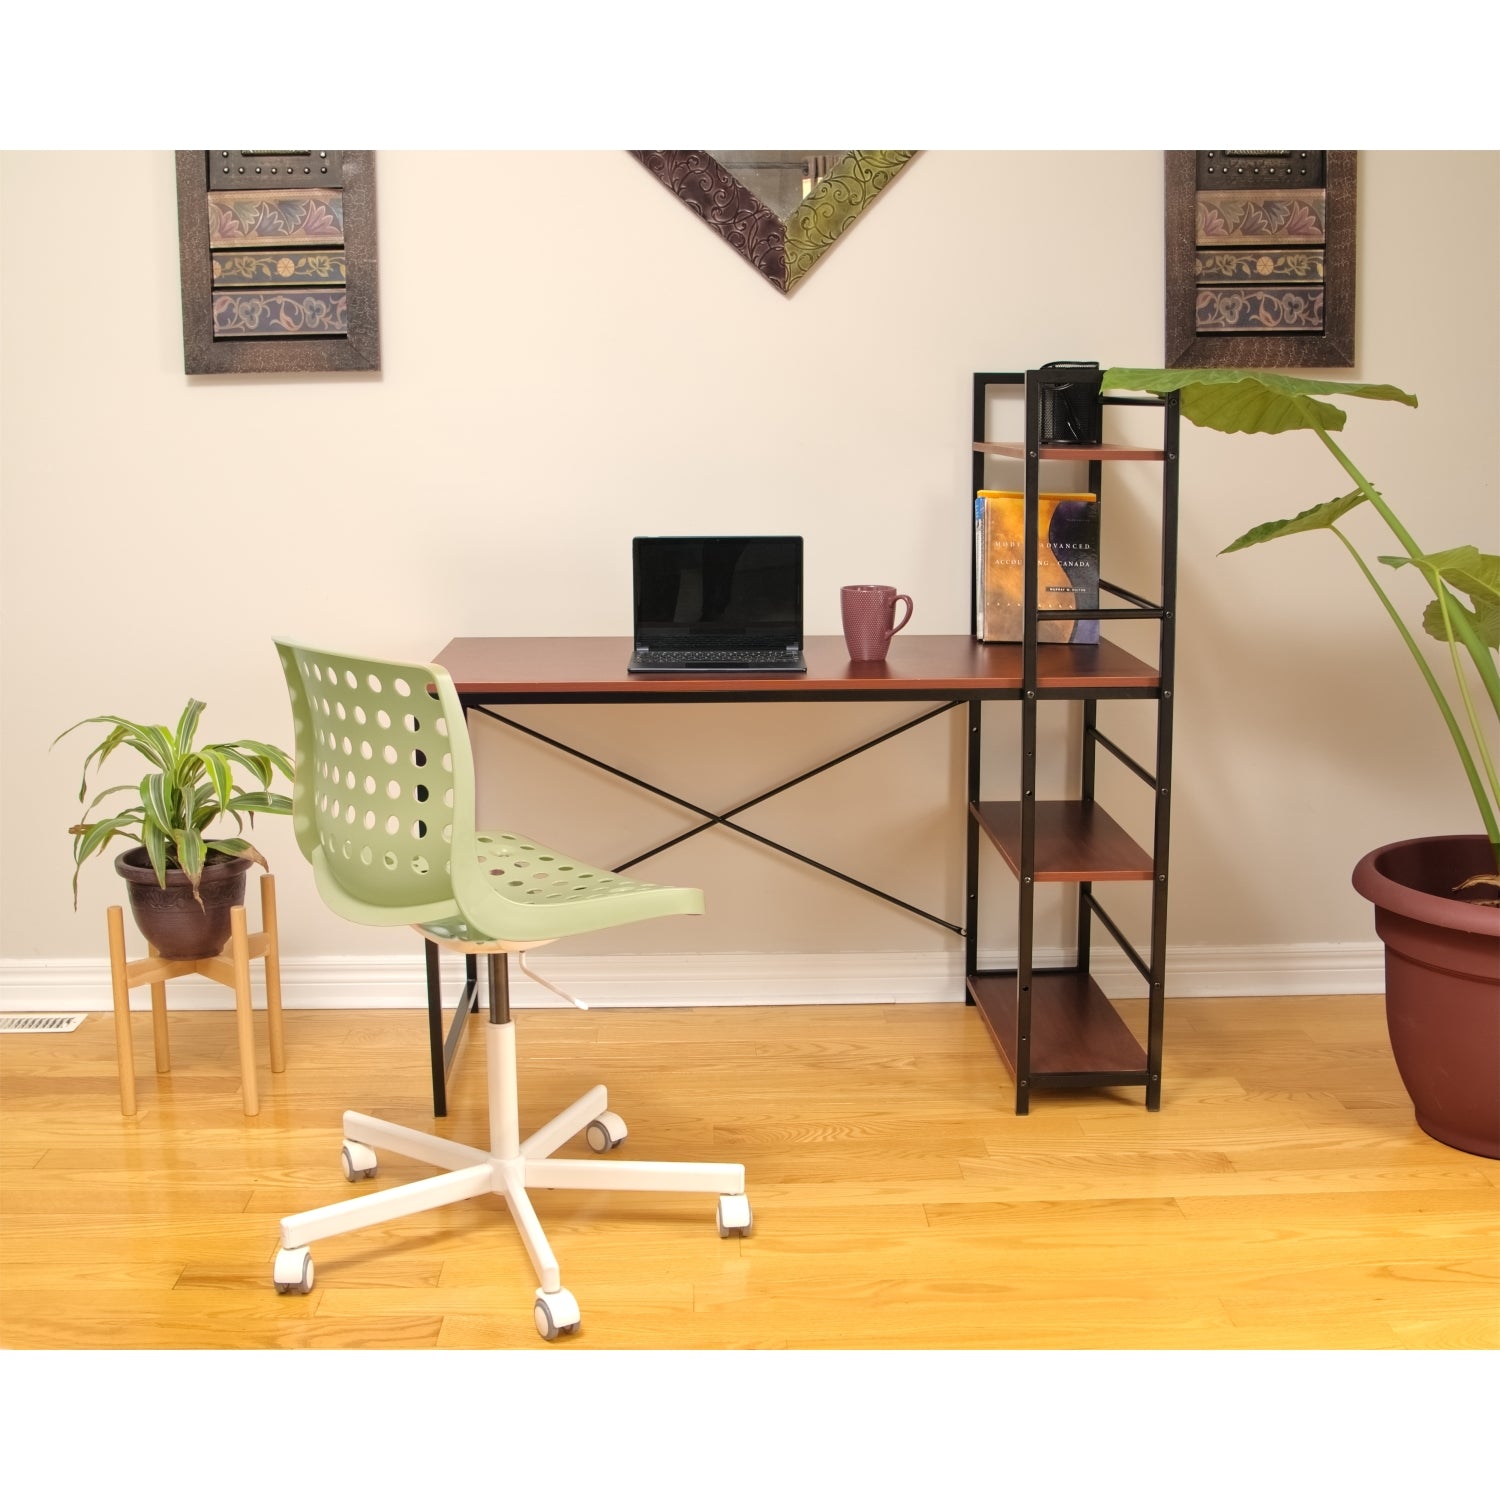 ZfLogic ALTITUDE Shelf Computer Home Office Desk (Red Brown)